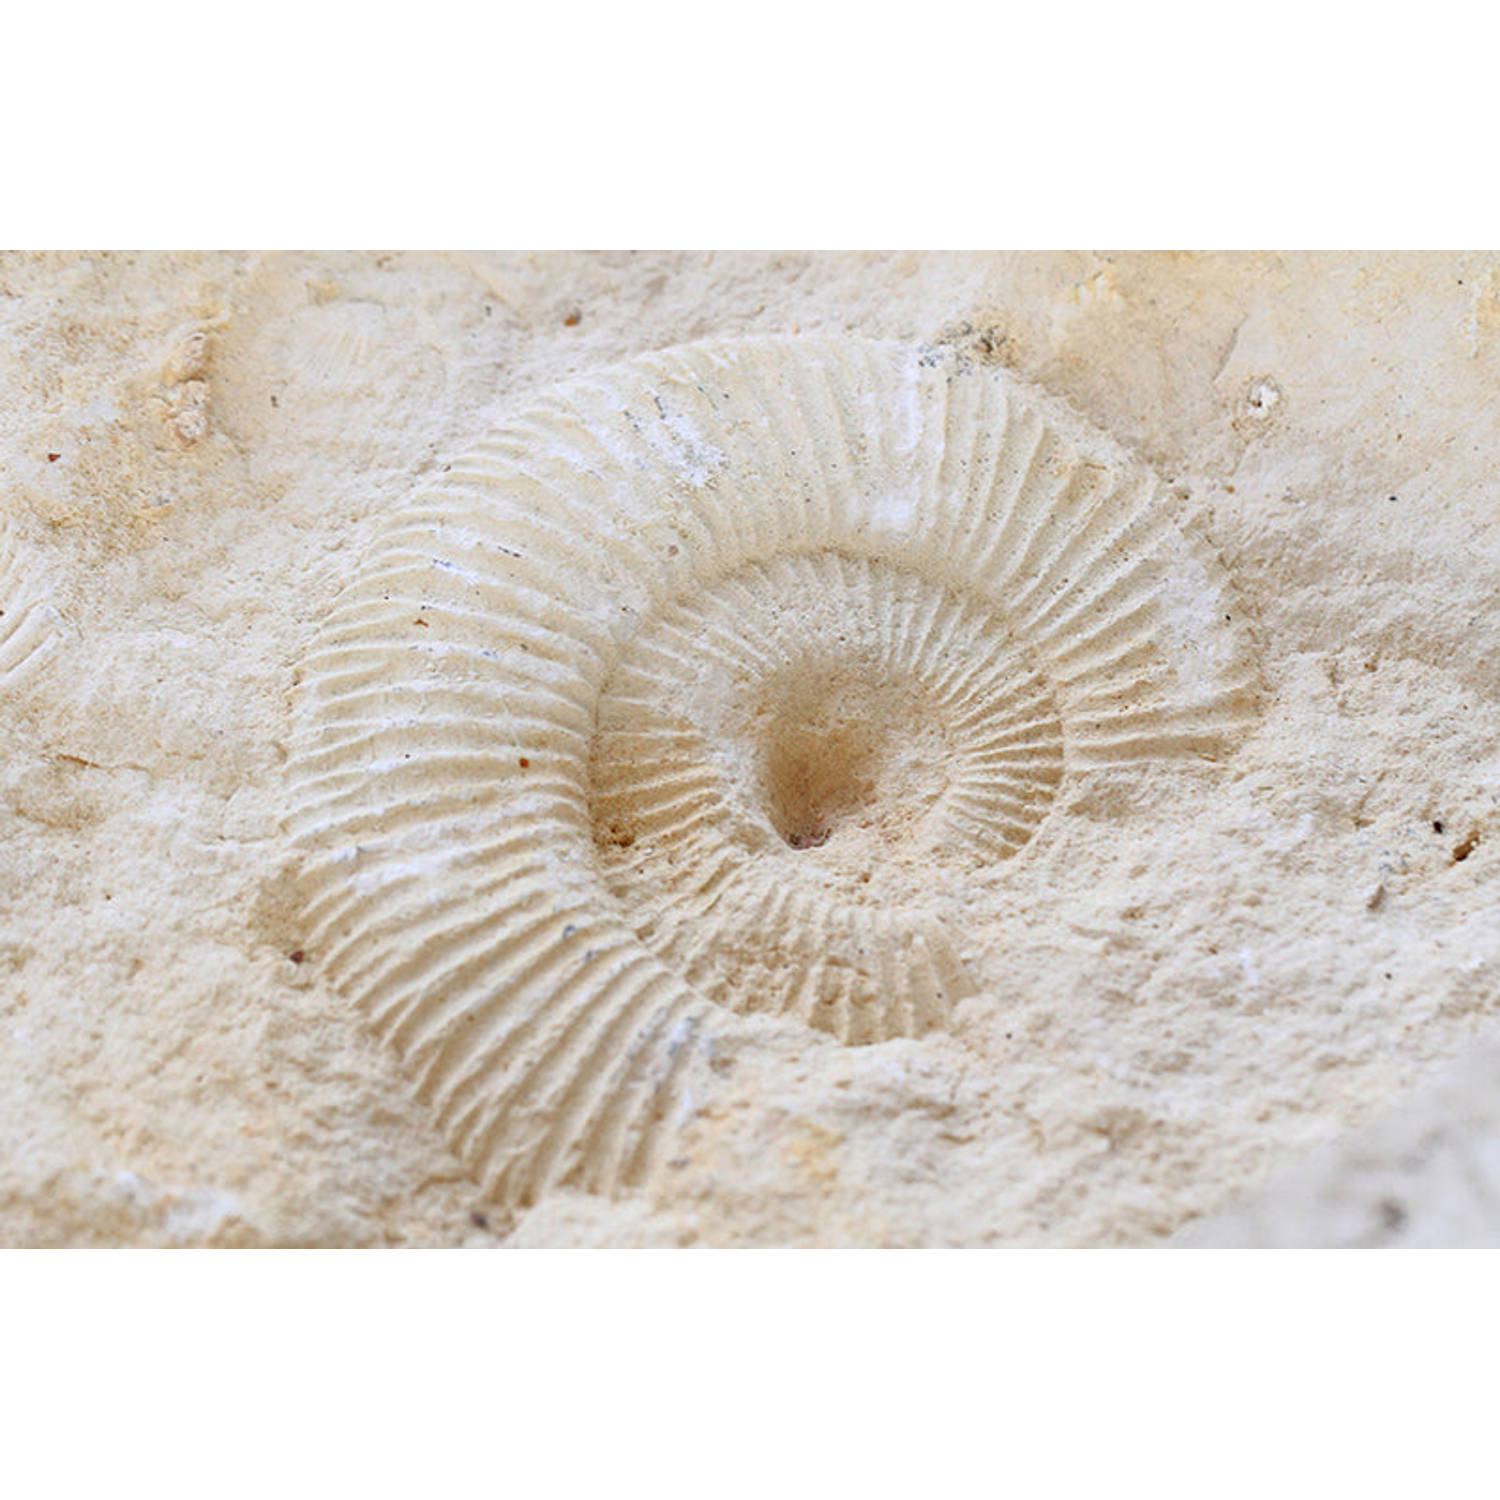 Inductiebeschermer - Ammonites Fossil - 65x50 cm - Inductiebeschermer - Inductie Afdekplaat Kookplaat - Inductie Mat - Anti-Slip - Keuken Decoratie - Keuken Accessoires